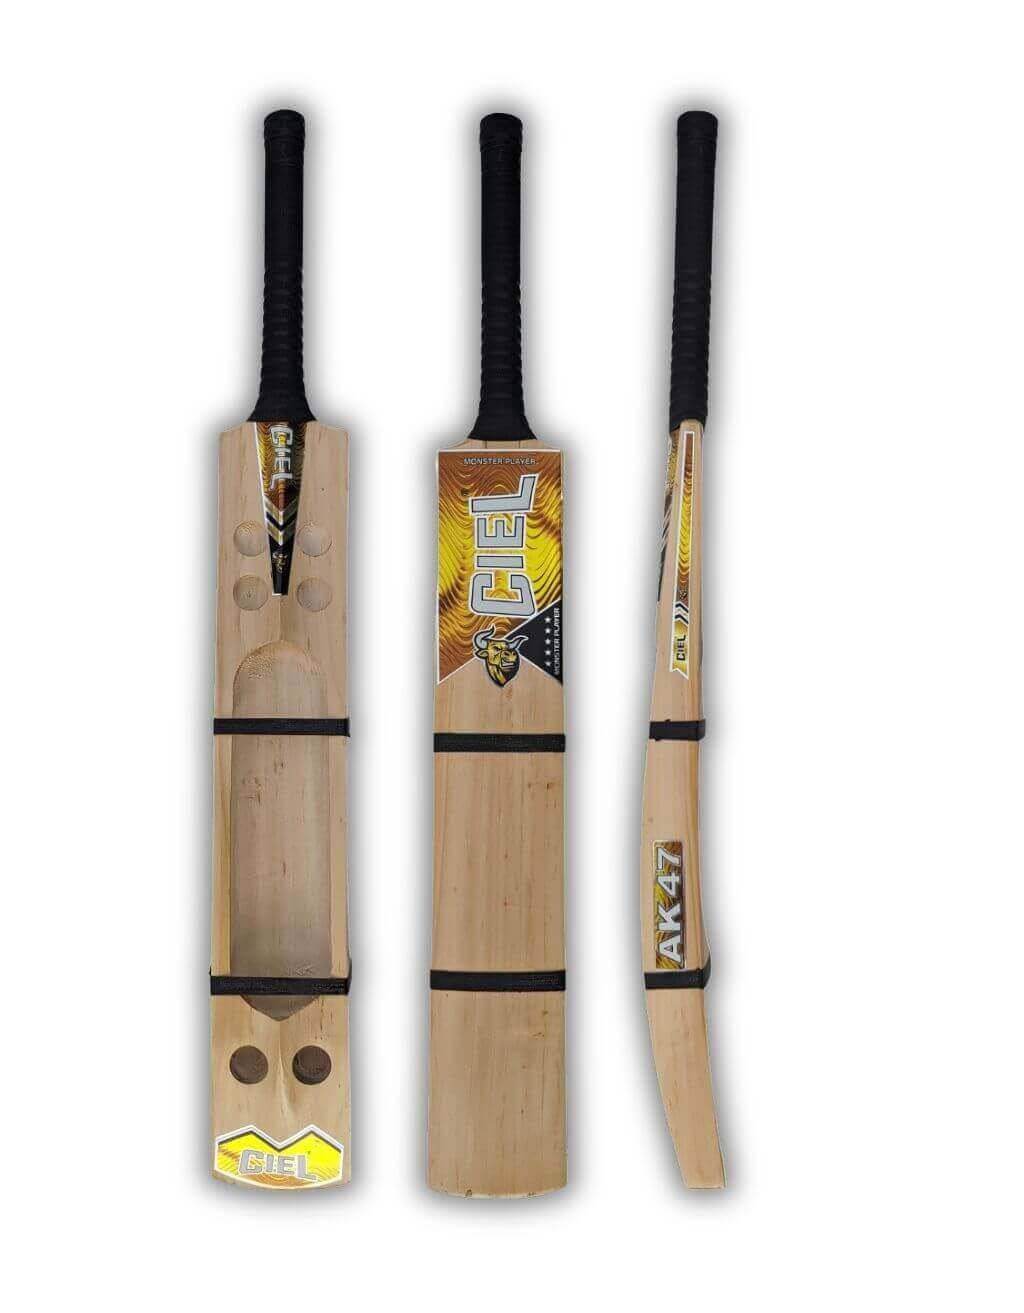 Tennis ball cricket bat all profiles